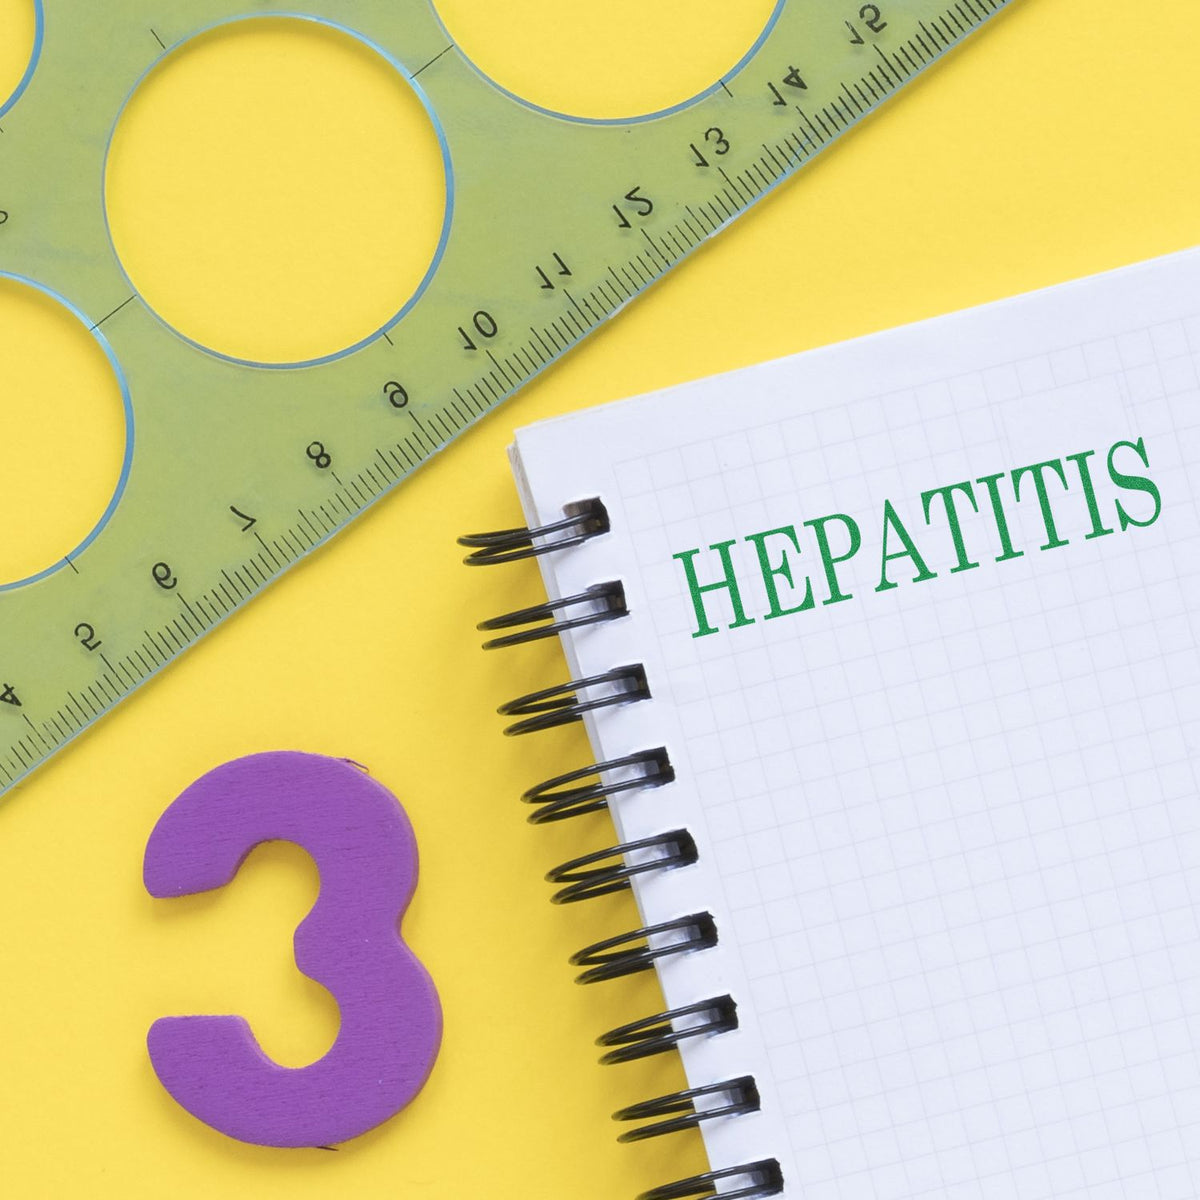 Hepatitis Rubber Stamp In Use